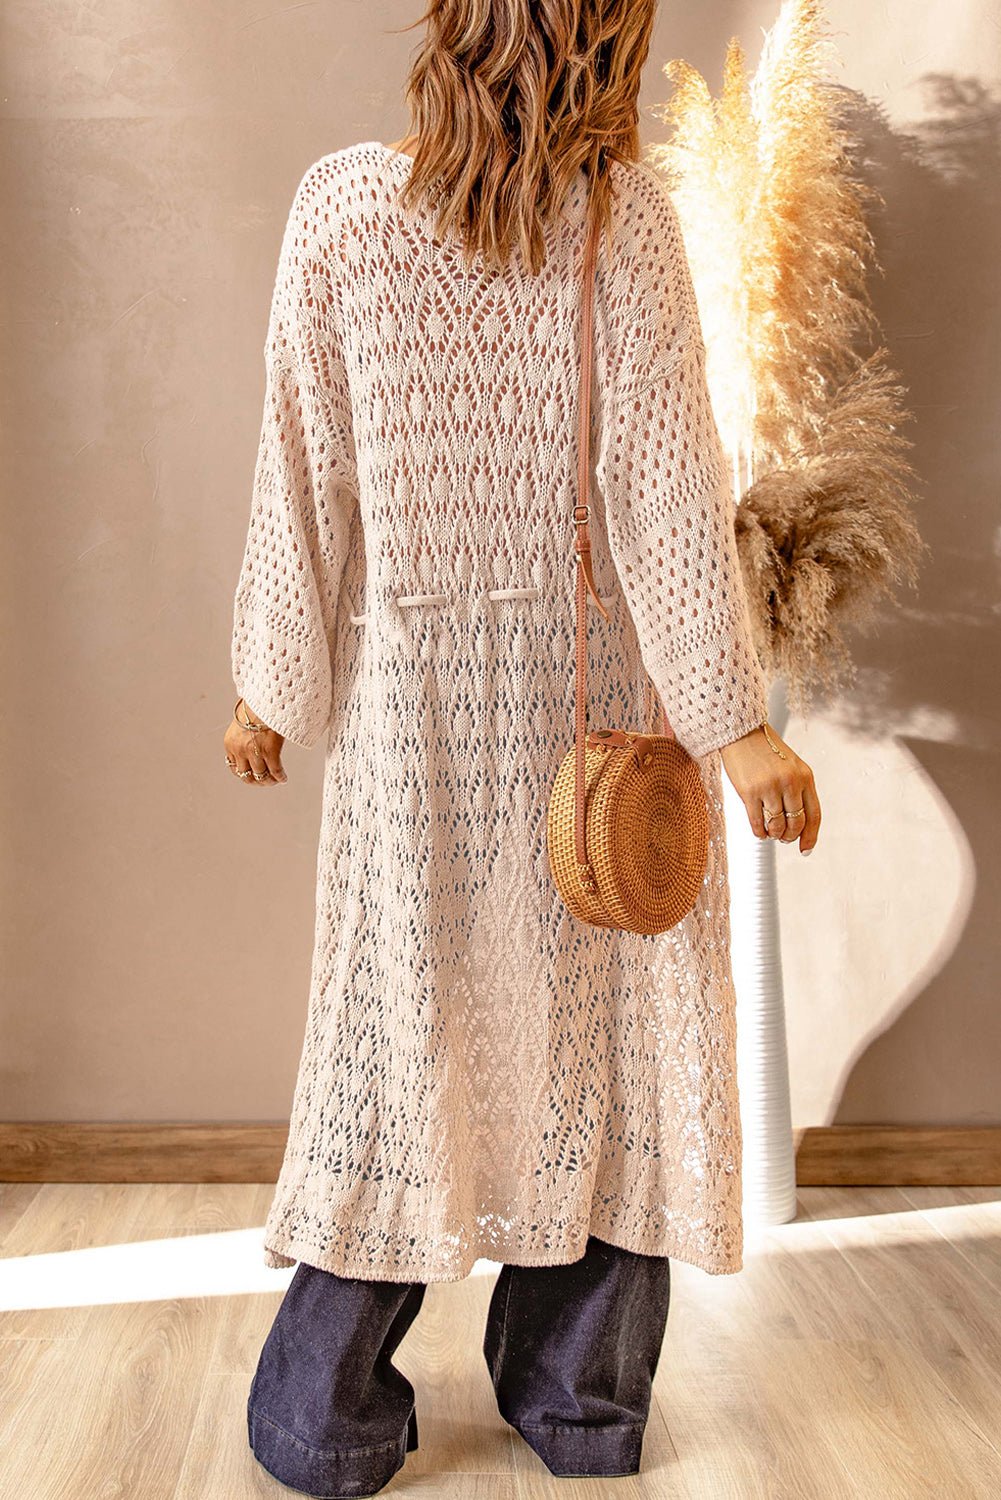 Dropped Shoulder Long Sleeve Crochet Duster Cardigan - Fashion Girl Online Store